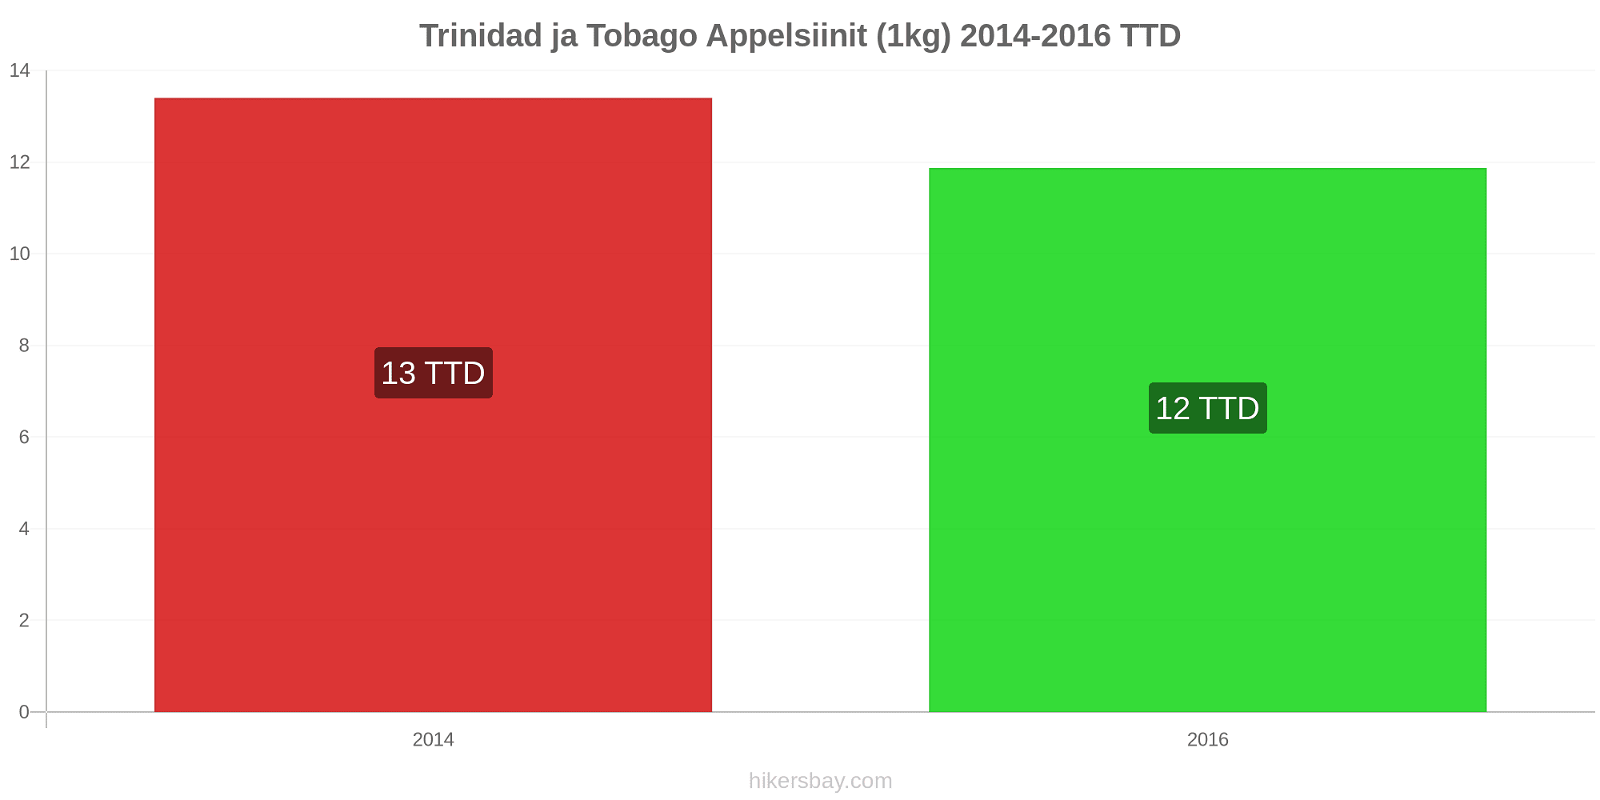 Trinidad ja Tobago hintojen muutokset Appelsiinit (1kg) hikersbay.com